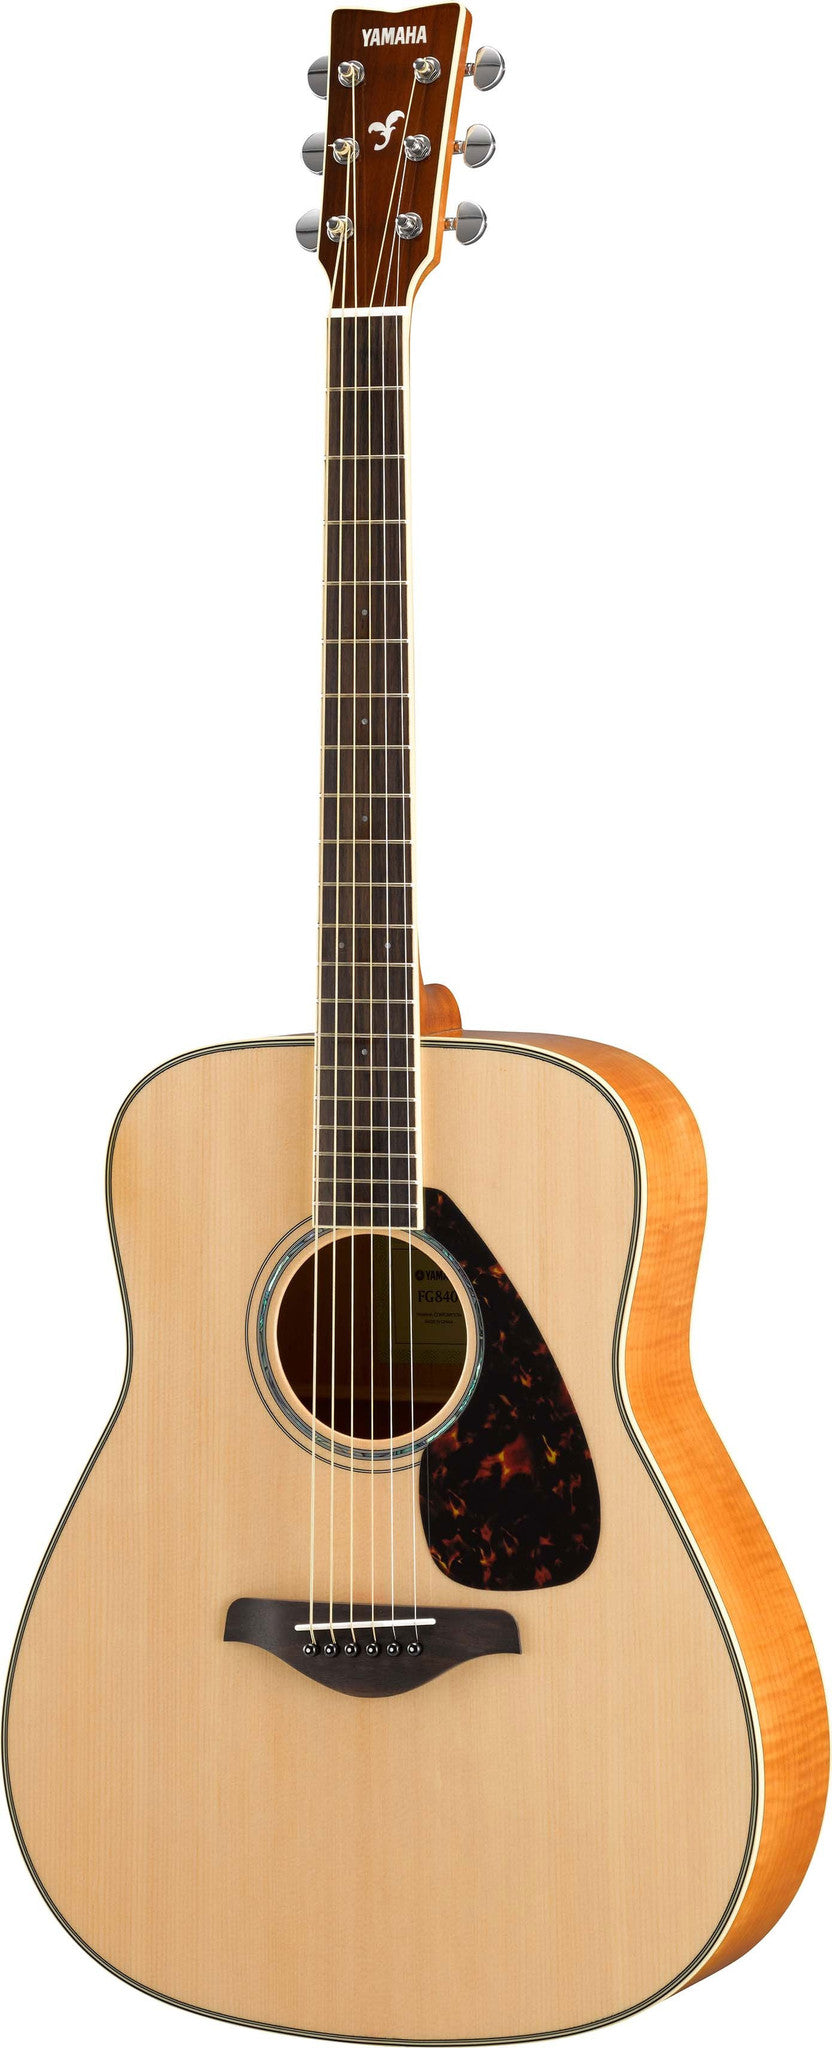 Yamaha FG840 Dreadnought Acoustic Guitar